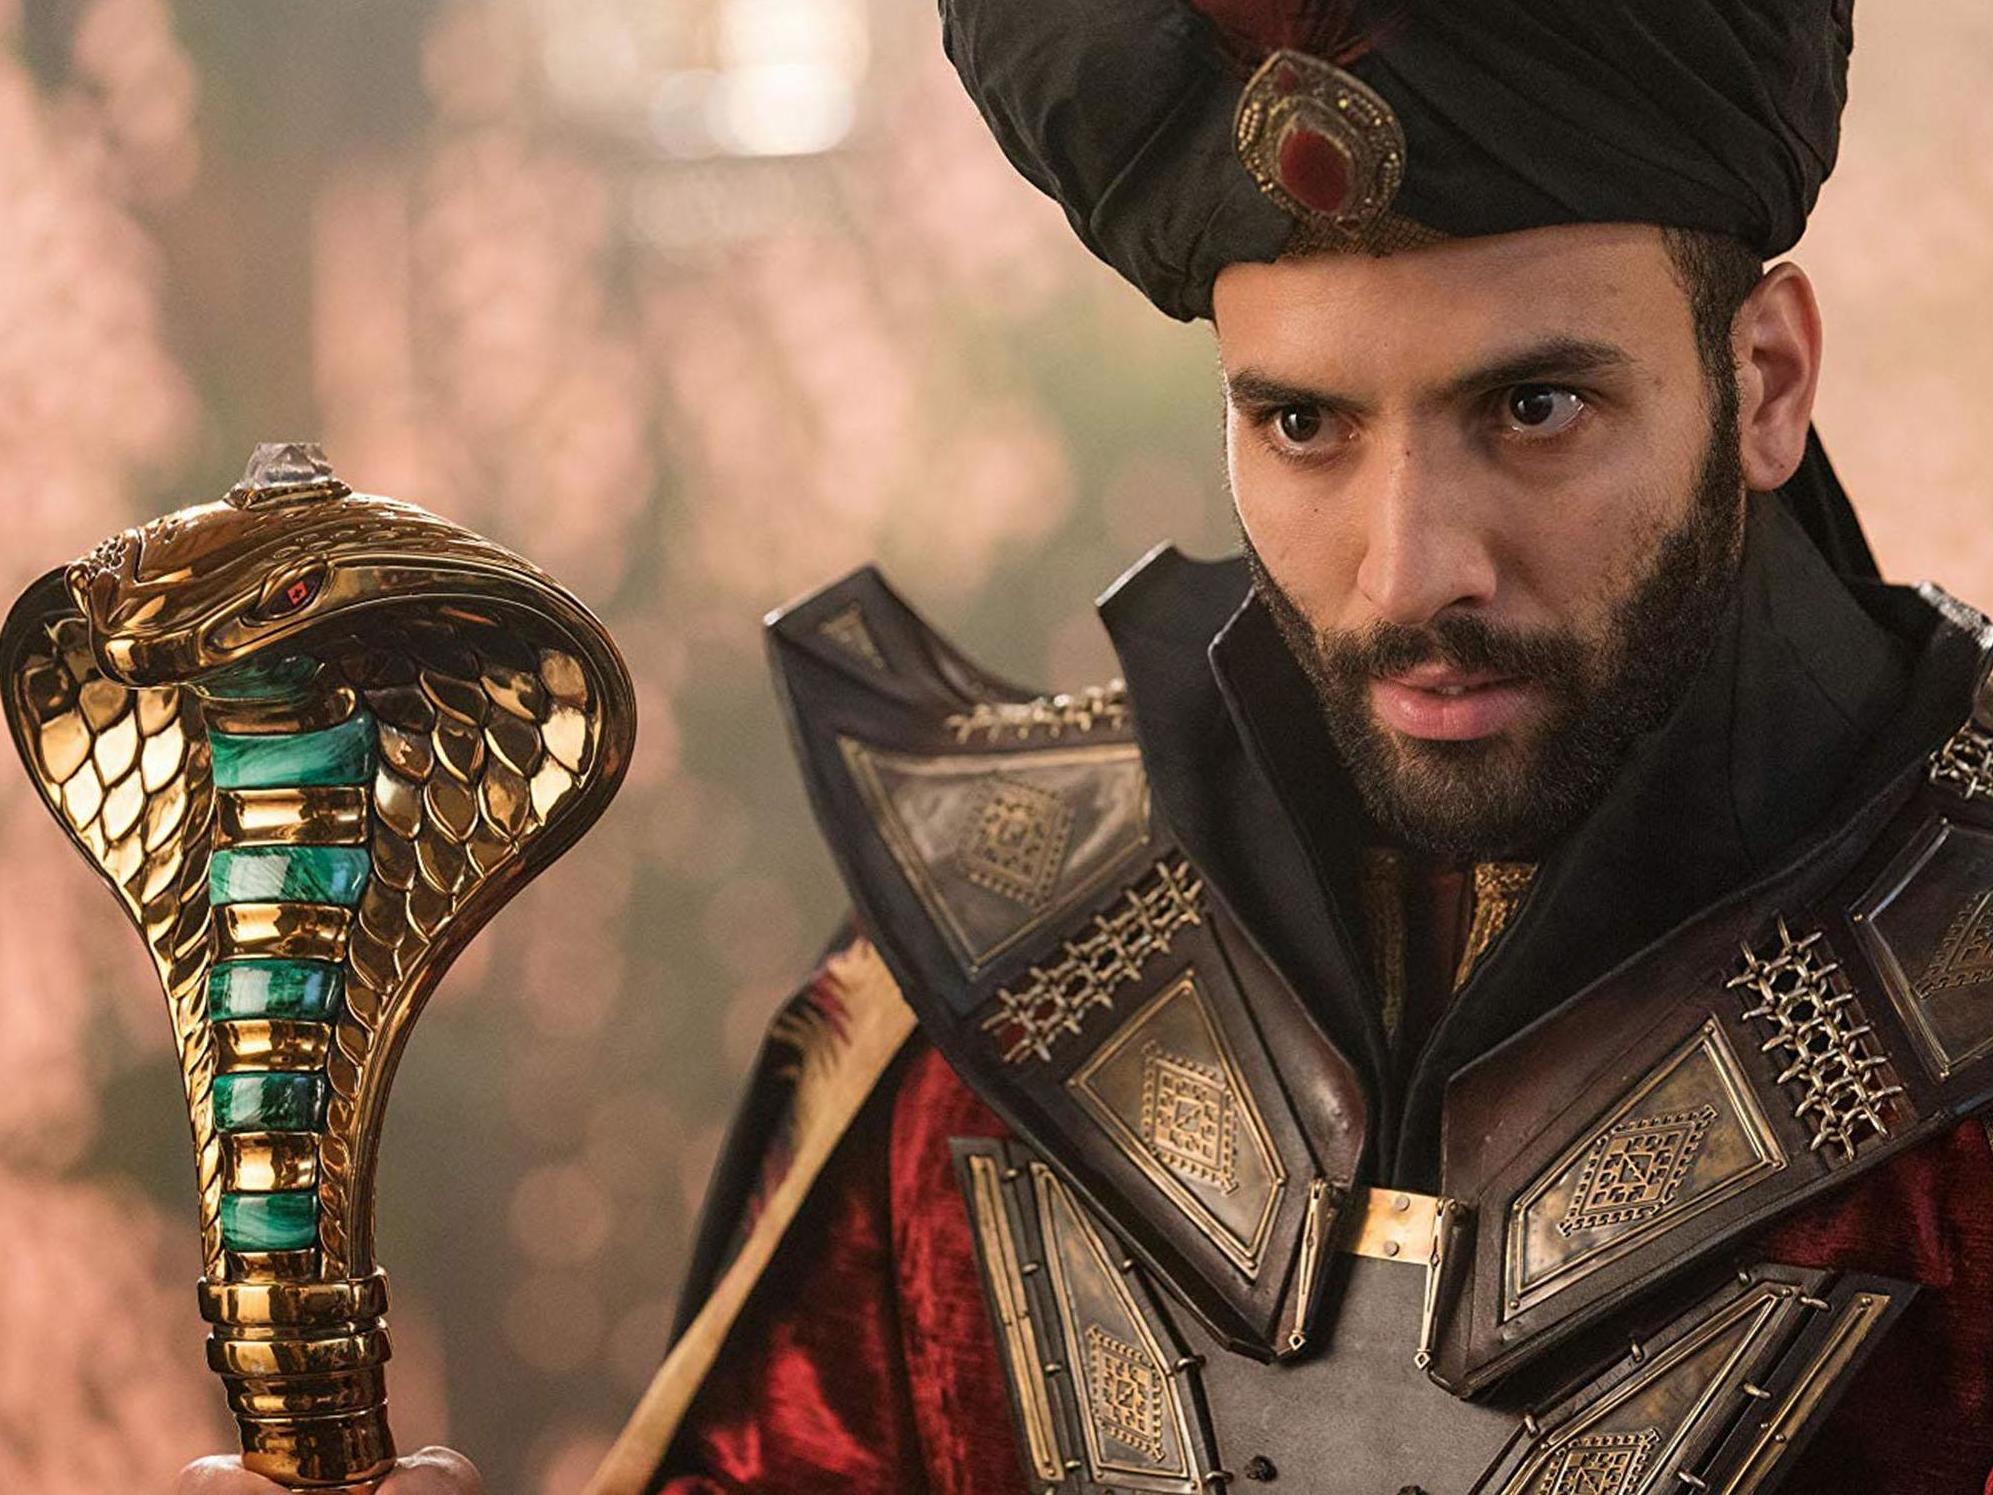 Dutch-Tunisian actor Marwan Kenzari plays Jafar in the live-action ‘Aladdin’ remake